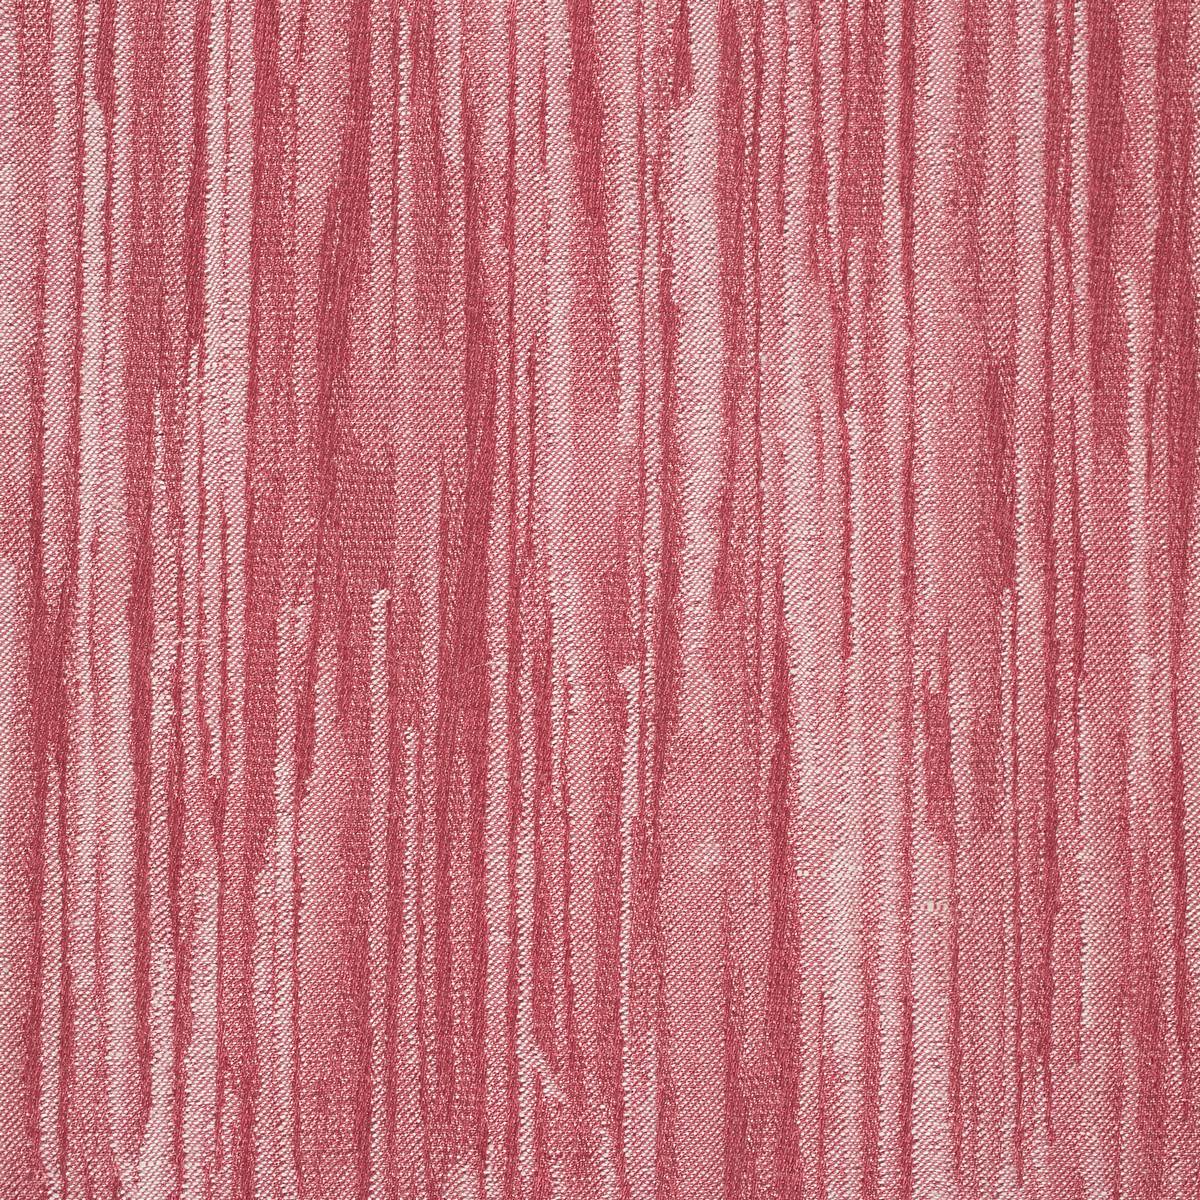 Cherwell Blossom Fabric by Sanderson